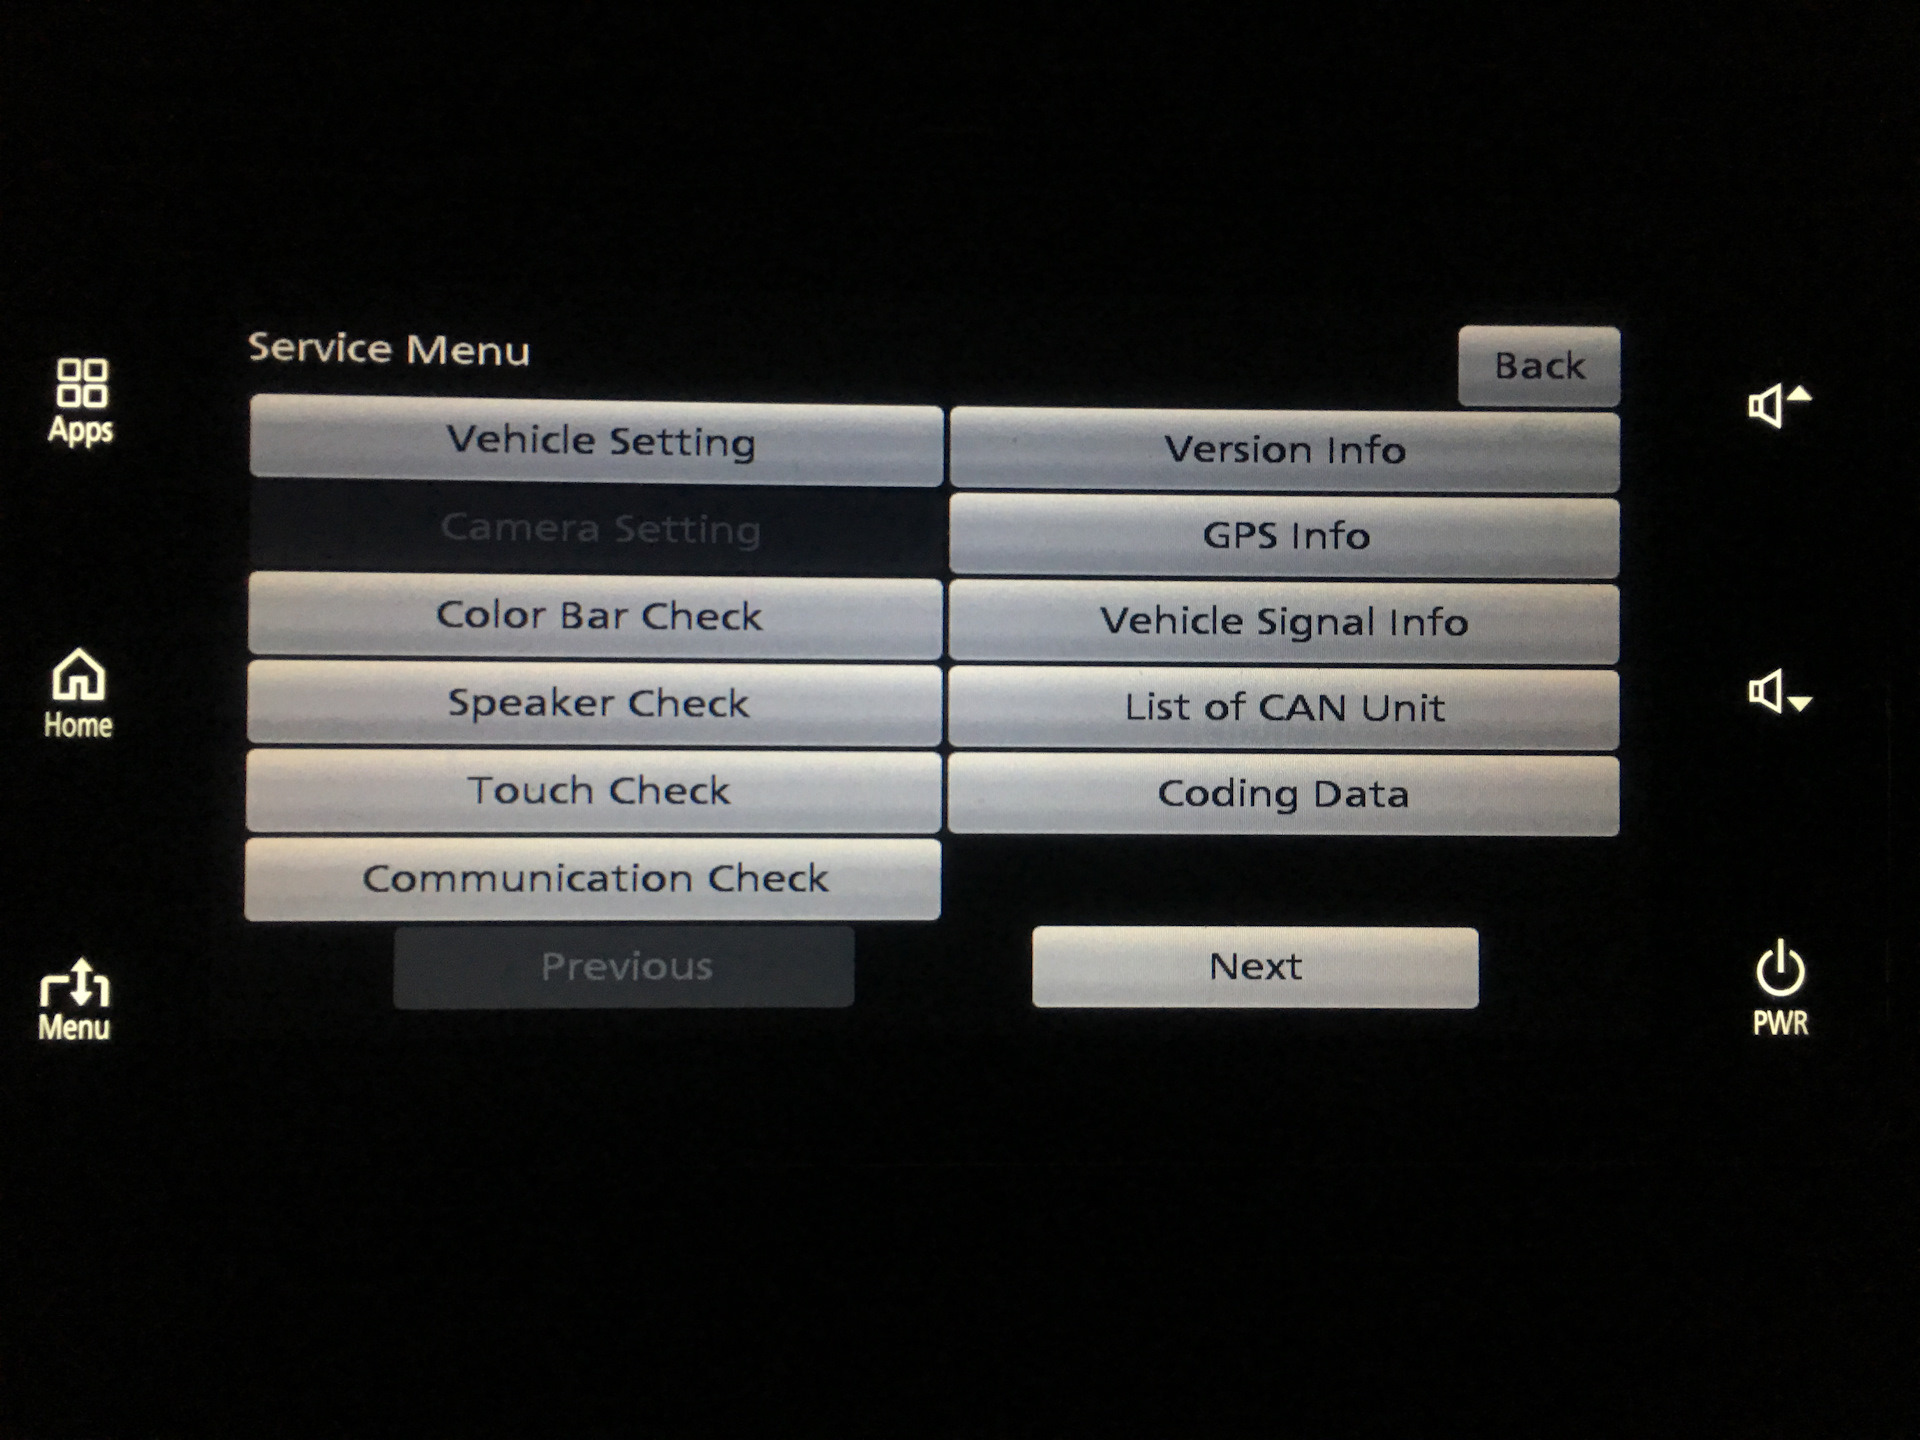 No original vehicle setting function